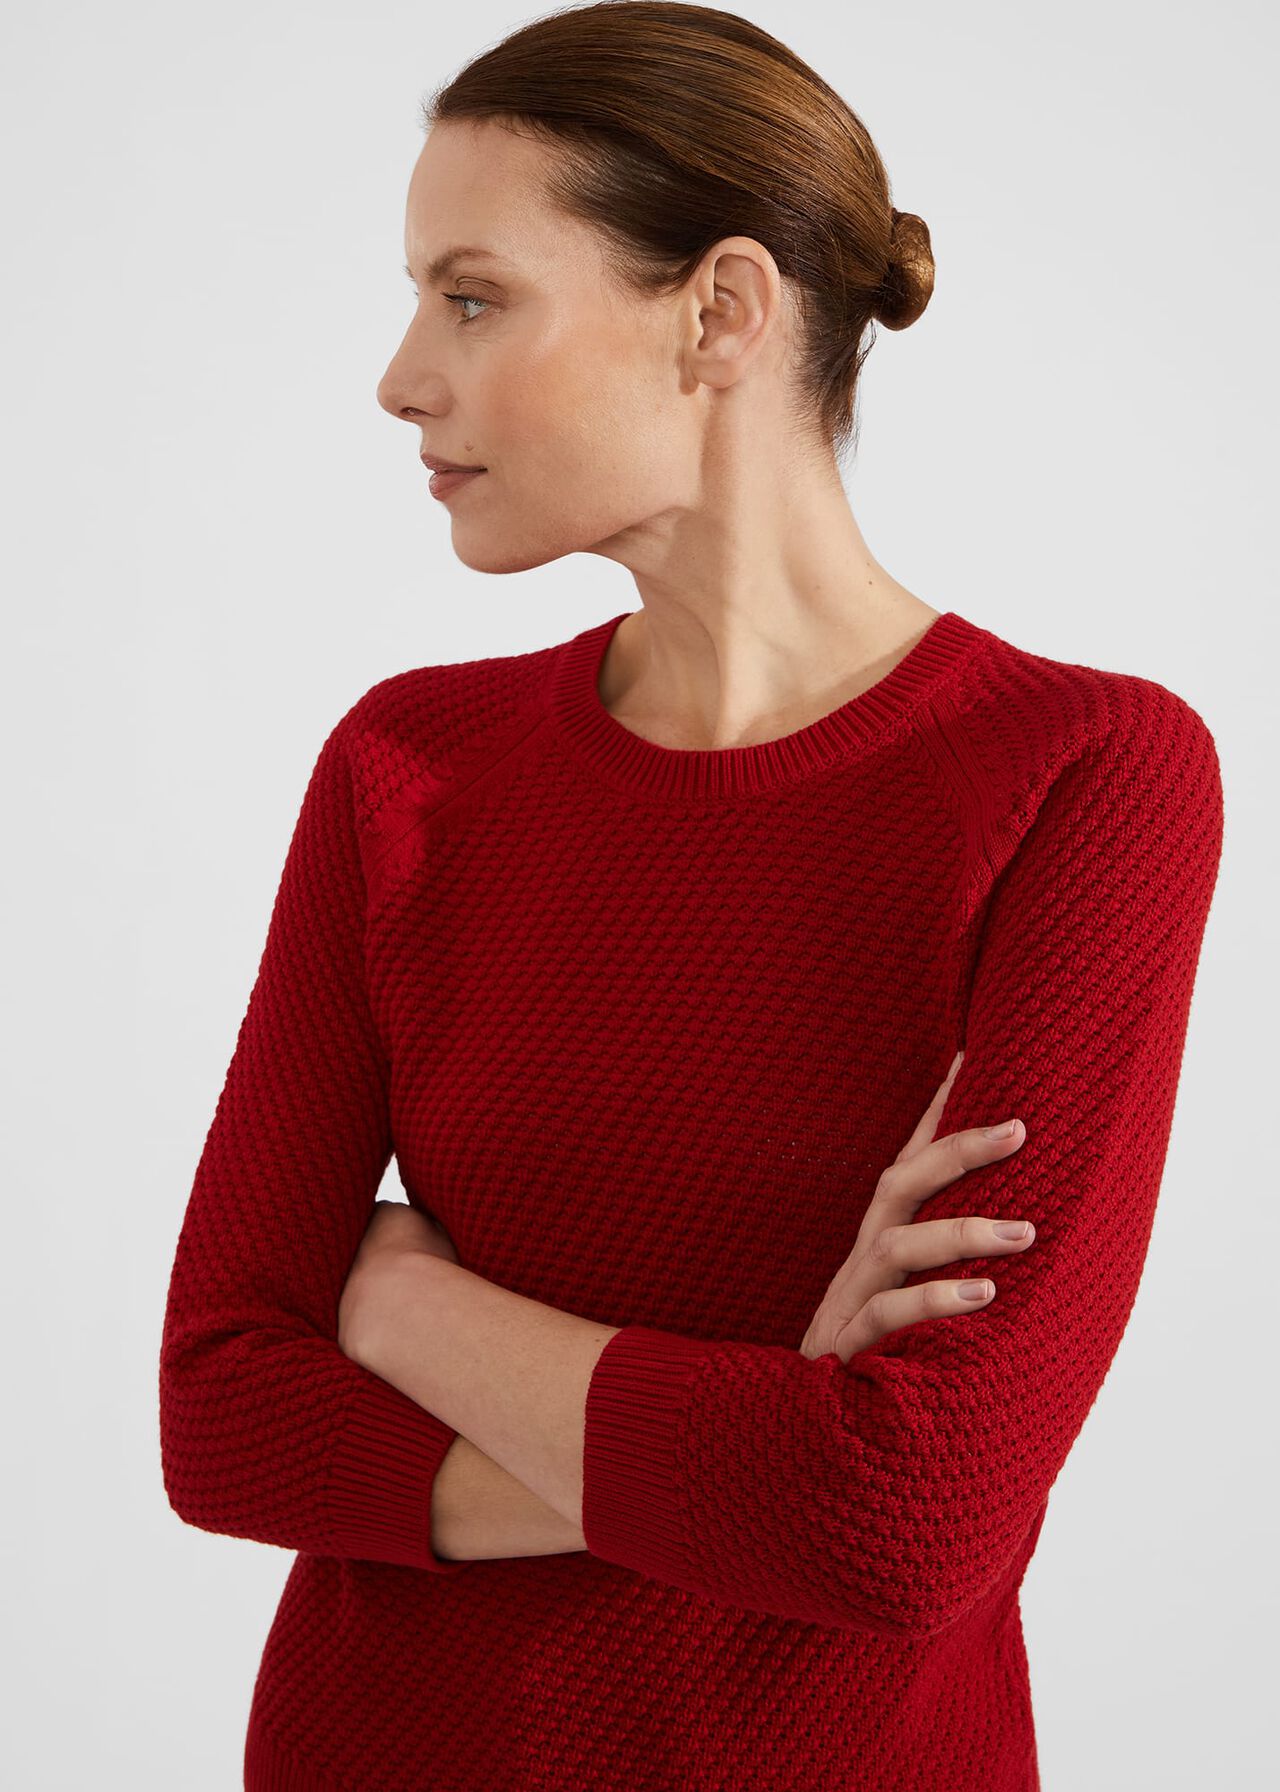 Lucie Cotton Sweater, True Red, hi-res